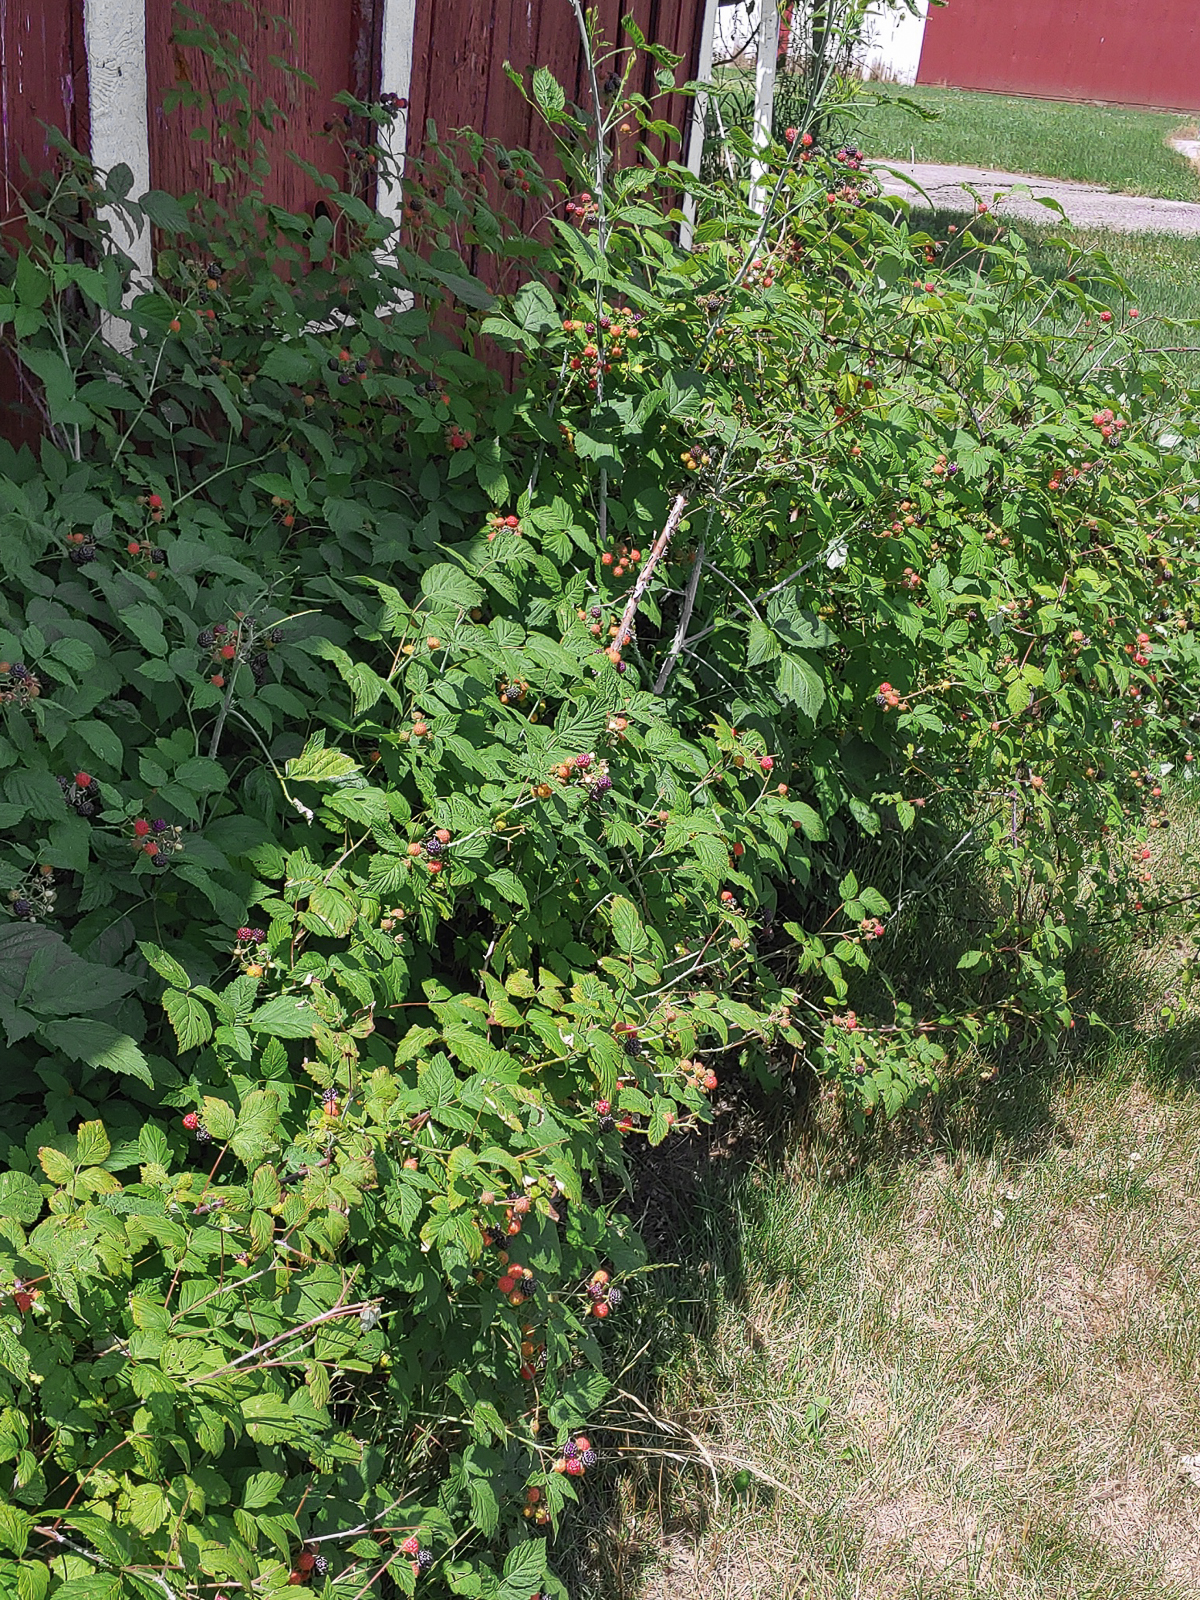 Bushes of wild blackberries behind the barn.